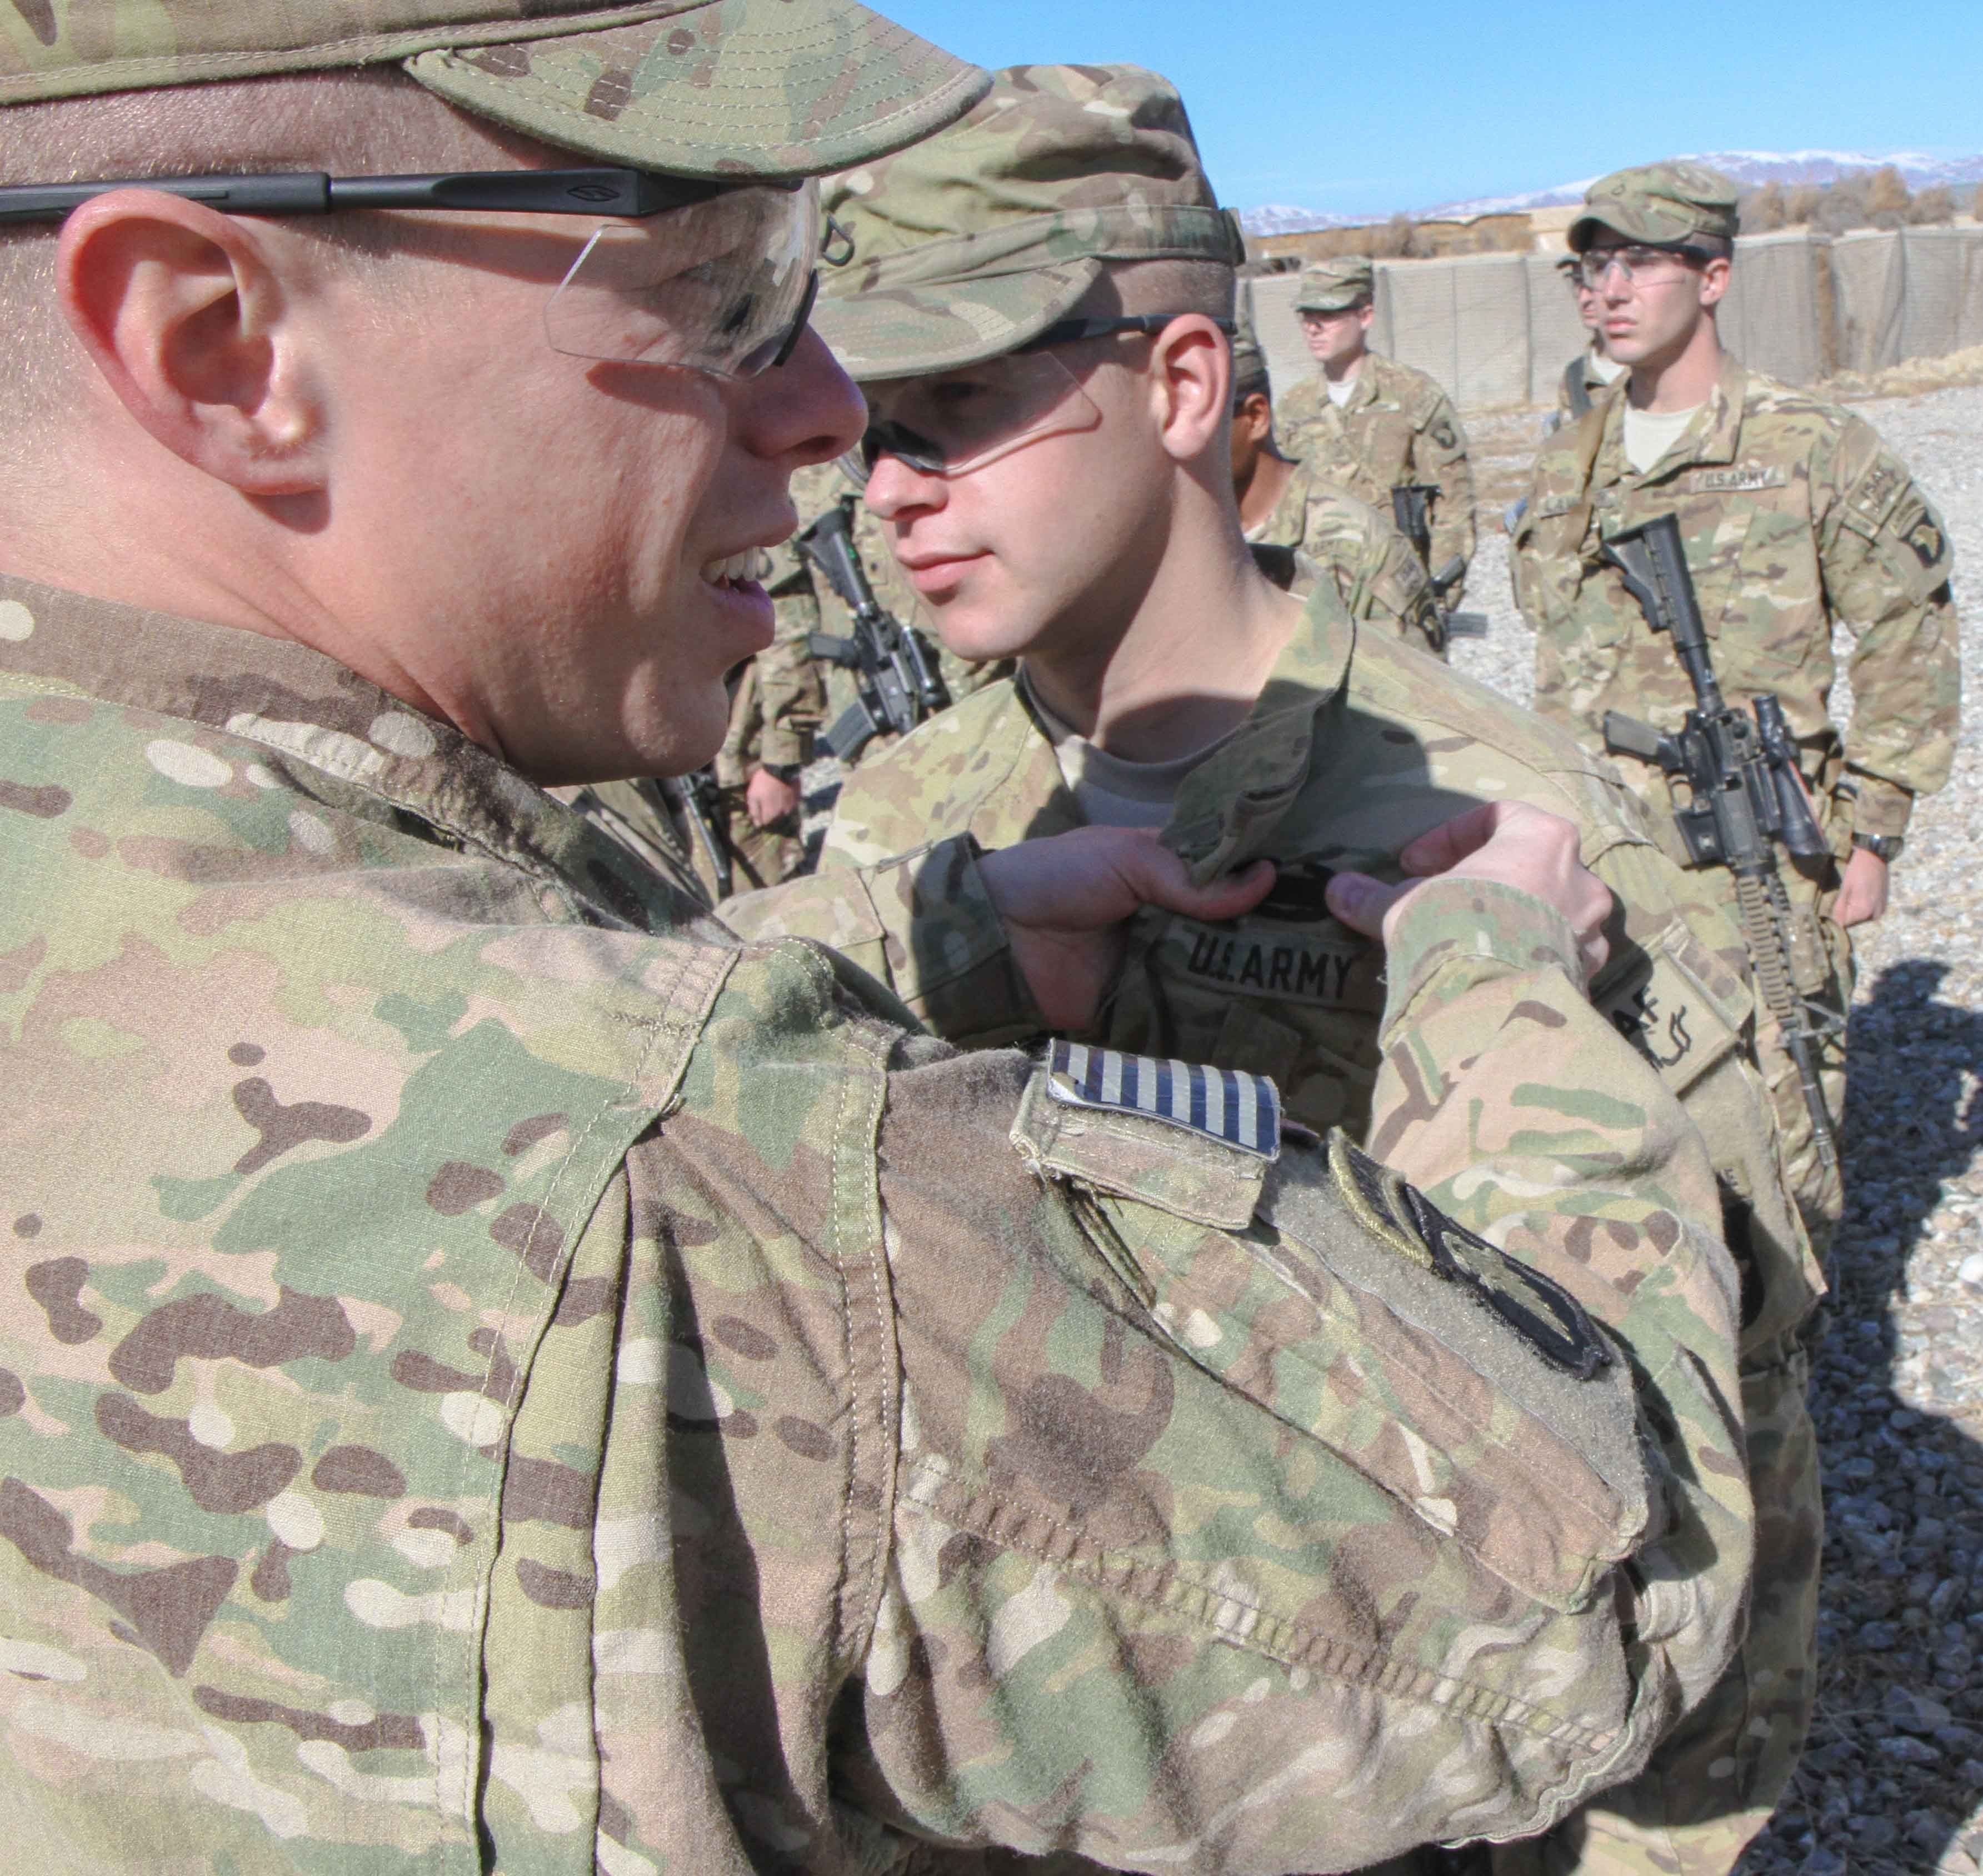 Rakkasans receive combat badges | Article | The United States Army